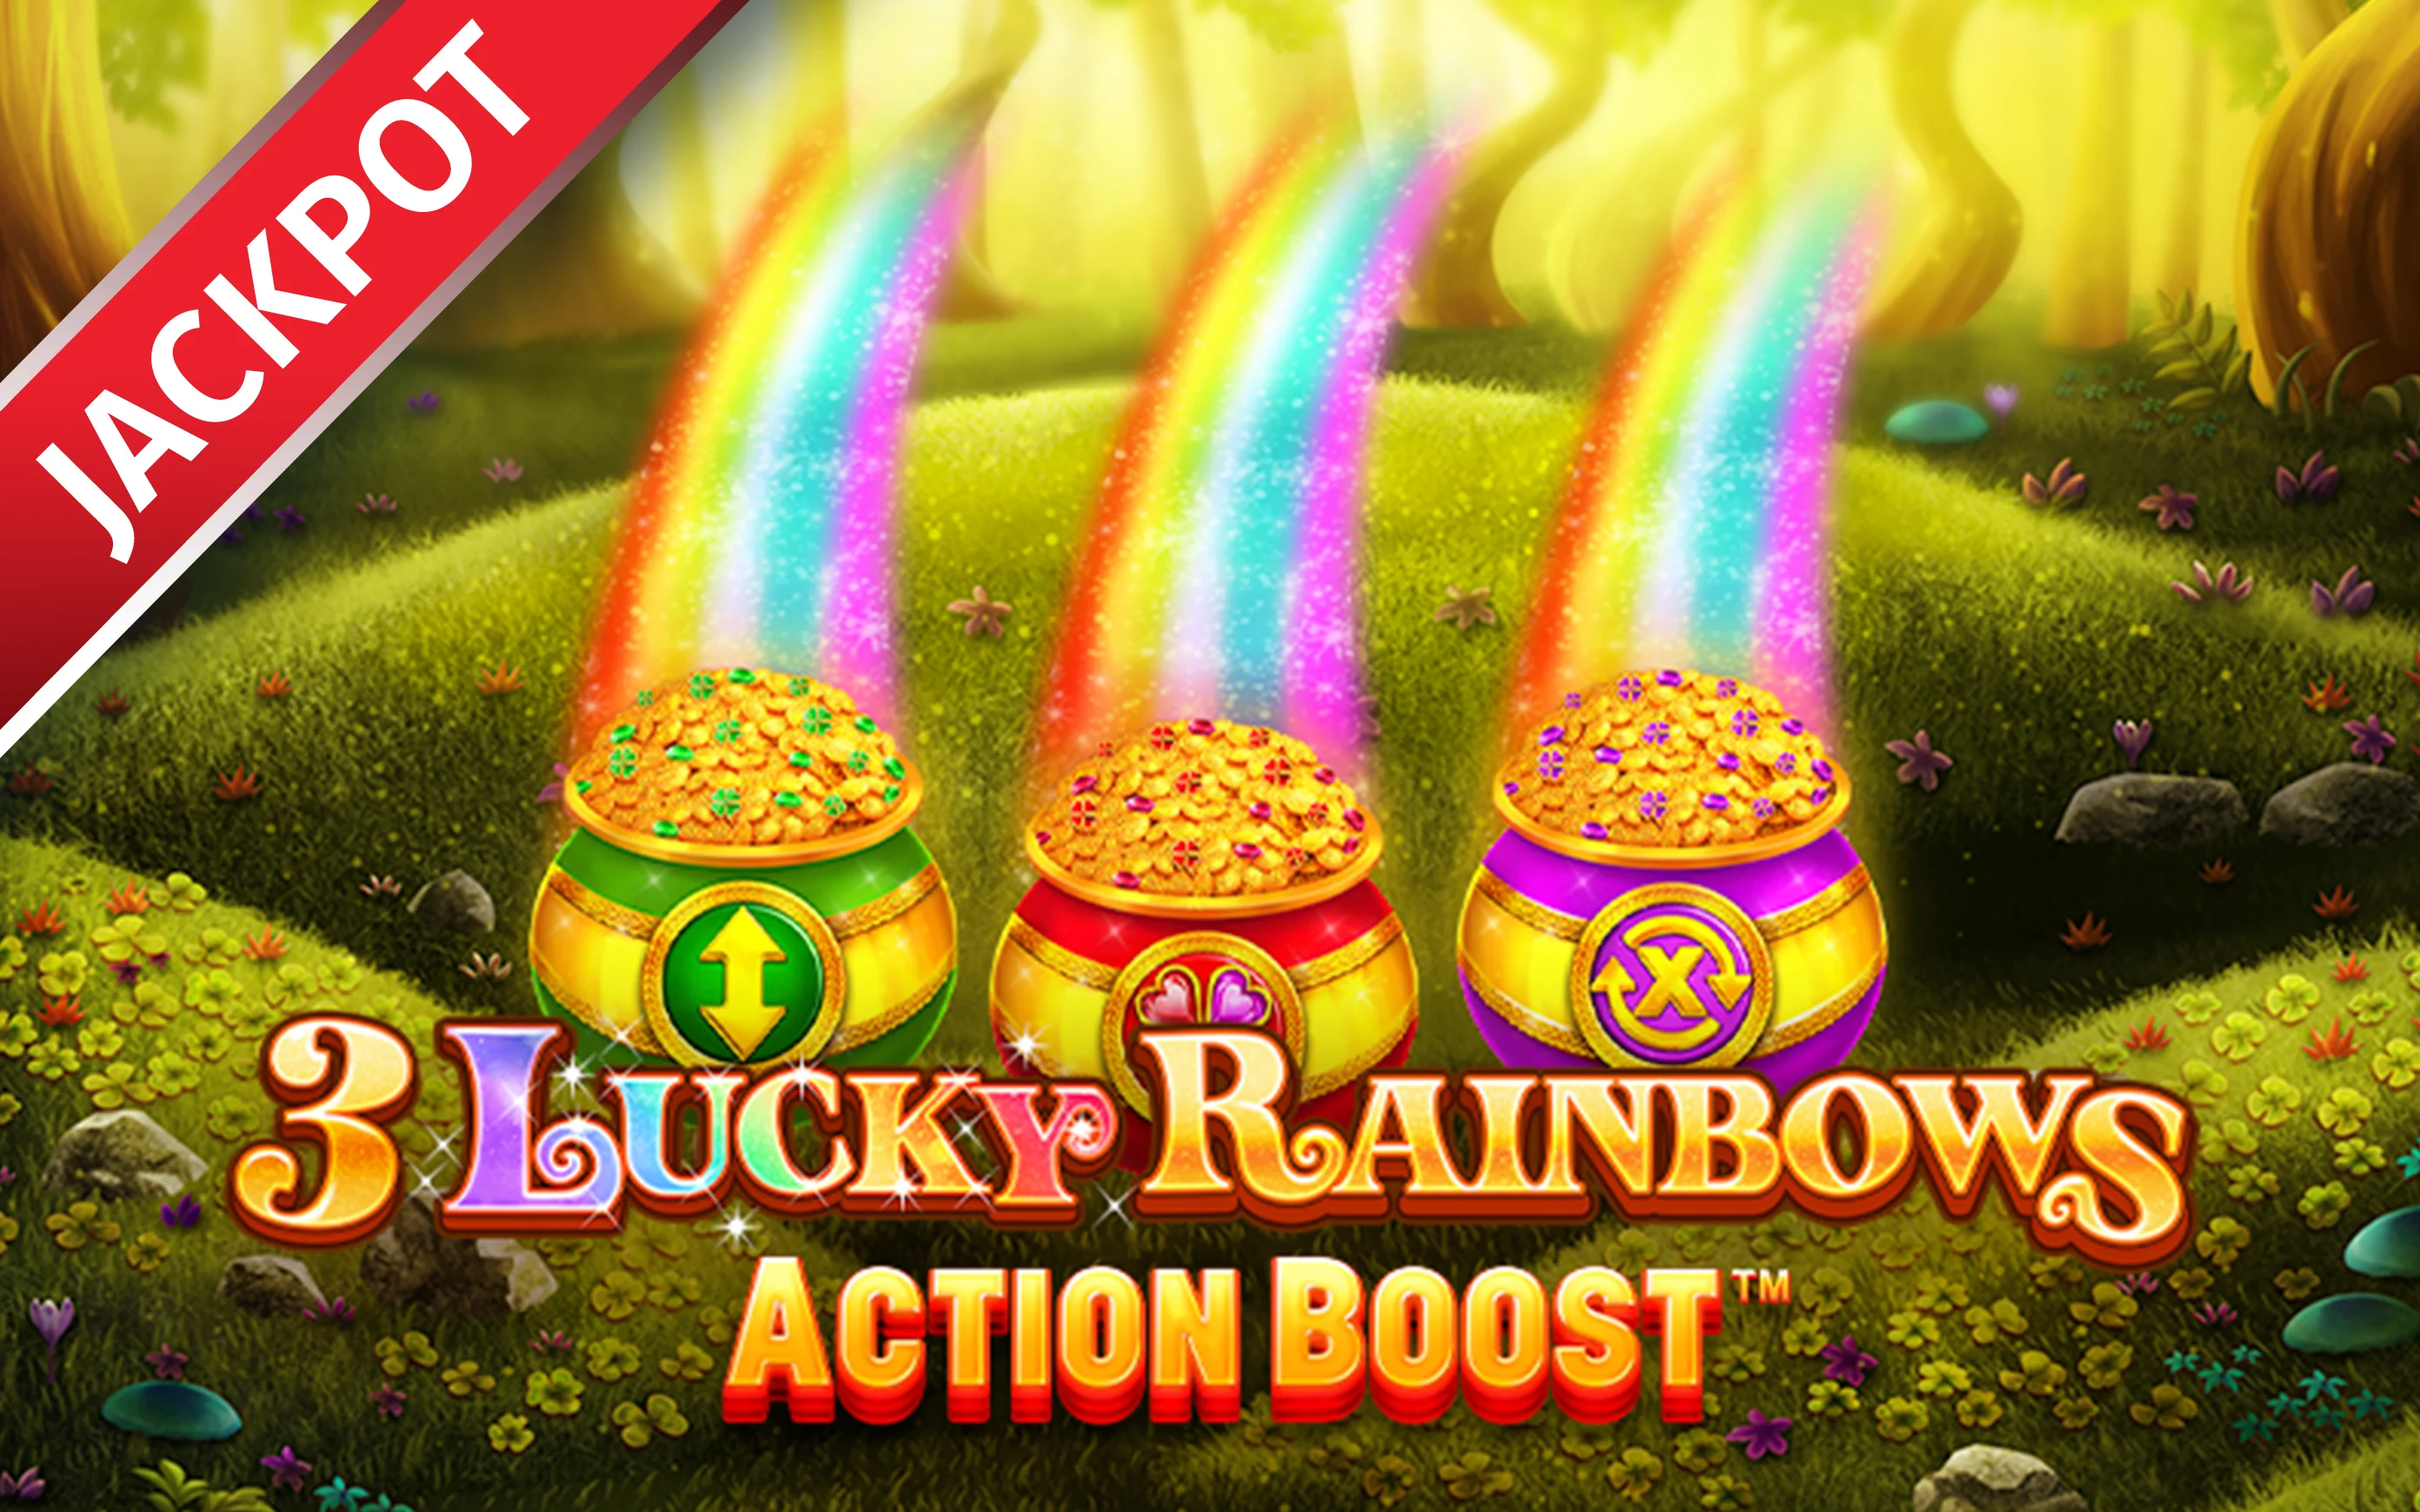 Spil Action Boost ™ 3 Lucky Rainbows på Starcasino.be online kasino
